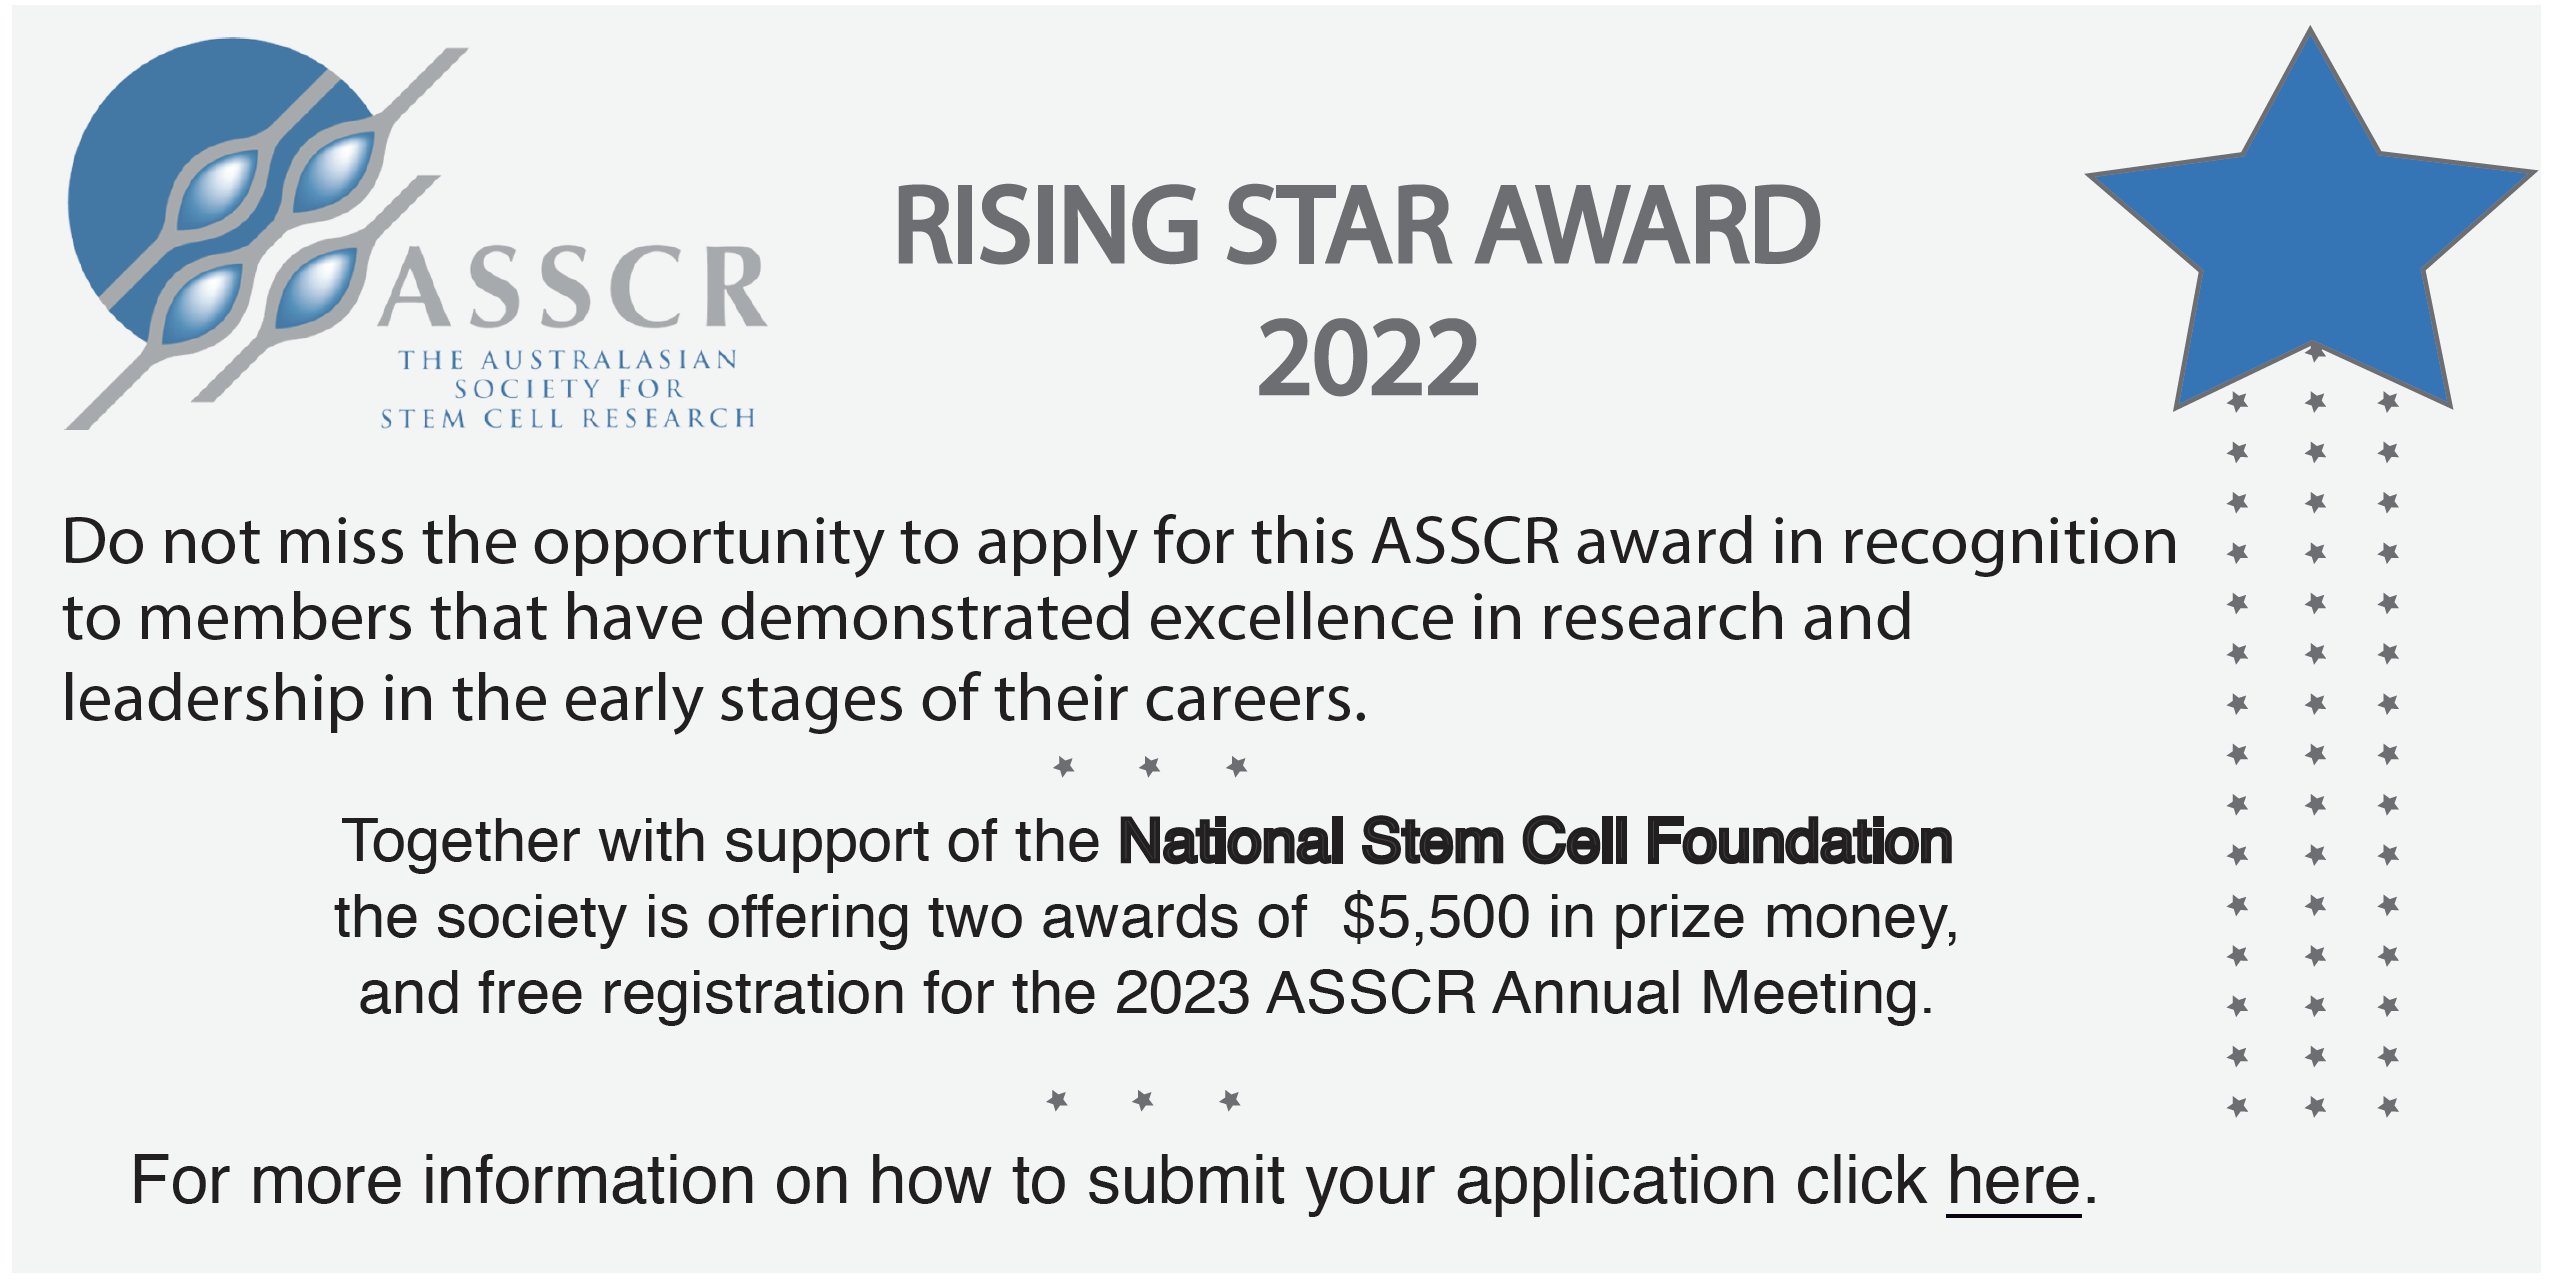 Apply for ASSCR Rising Star award until 31st August